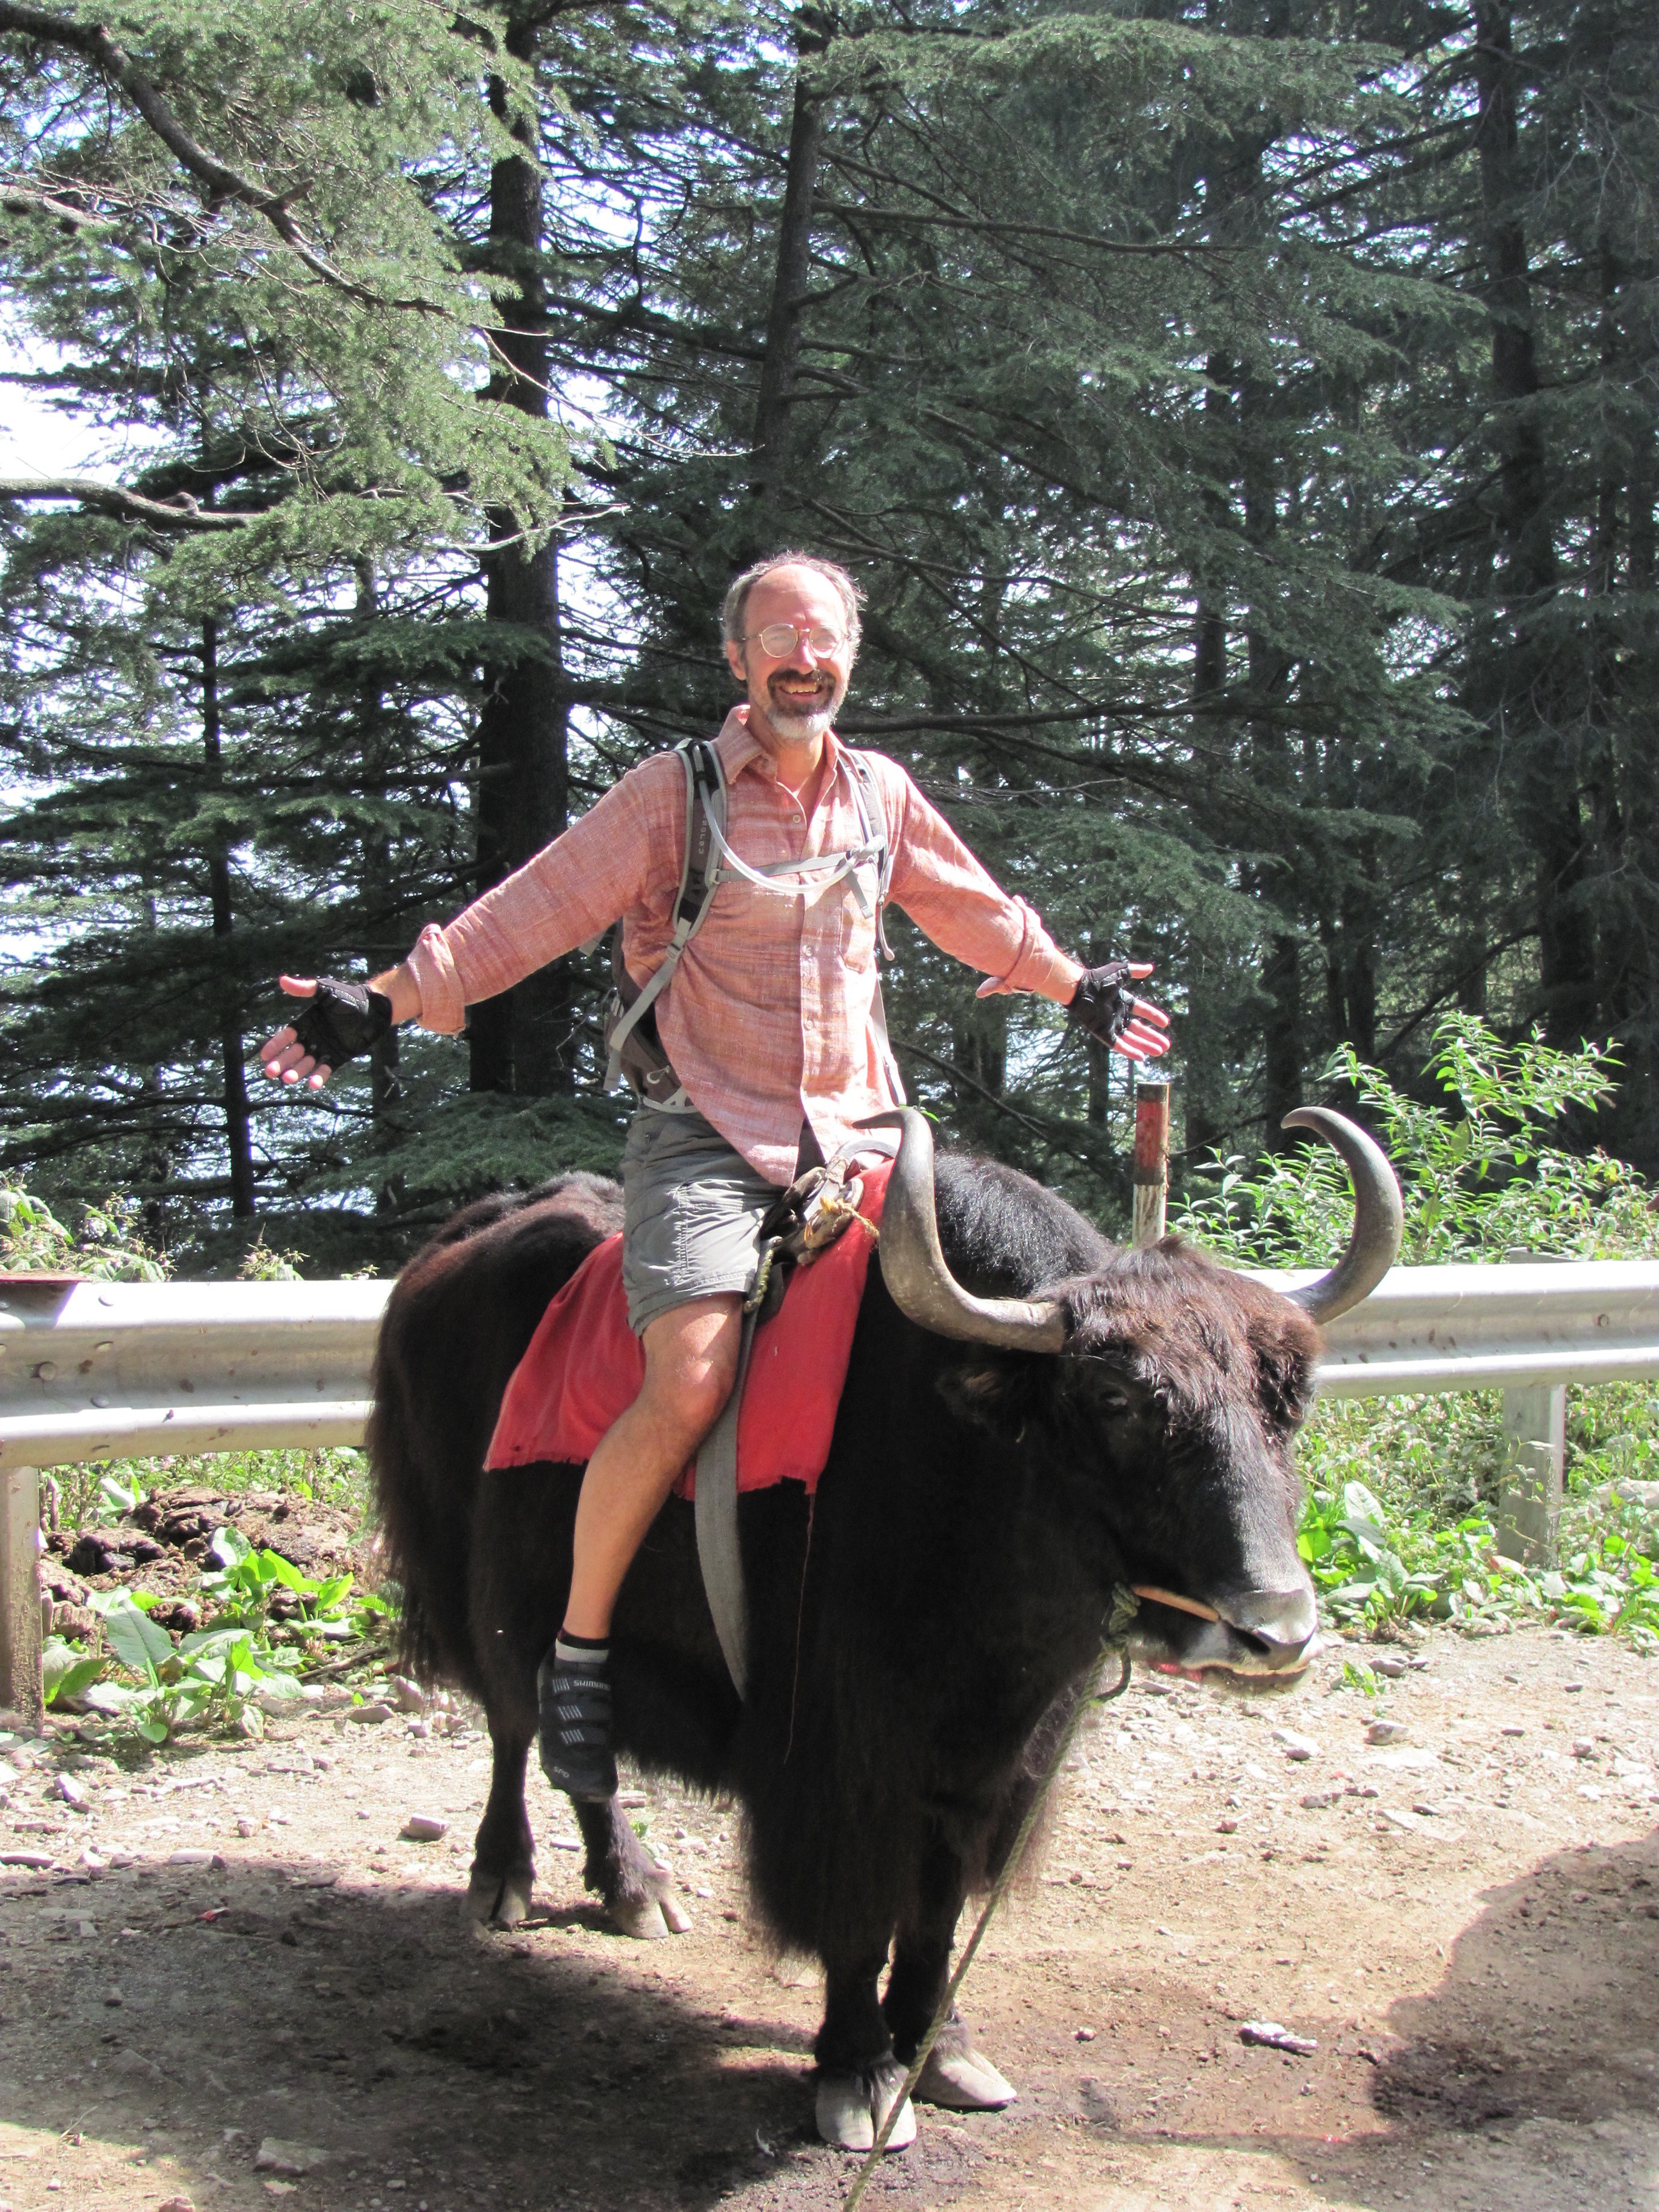 First yak ride